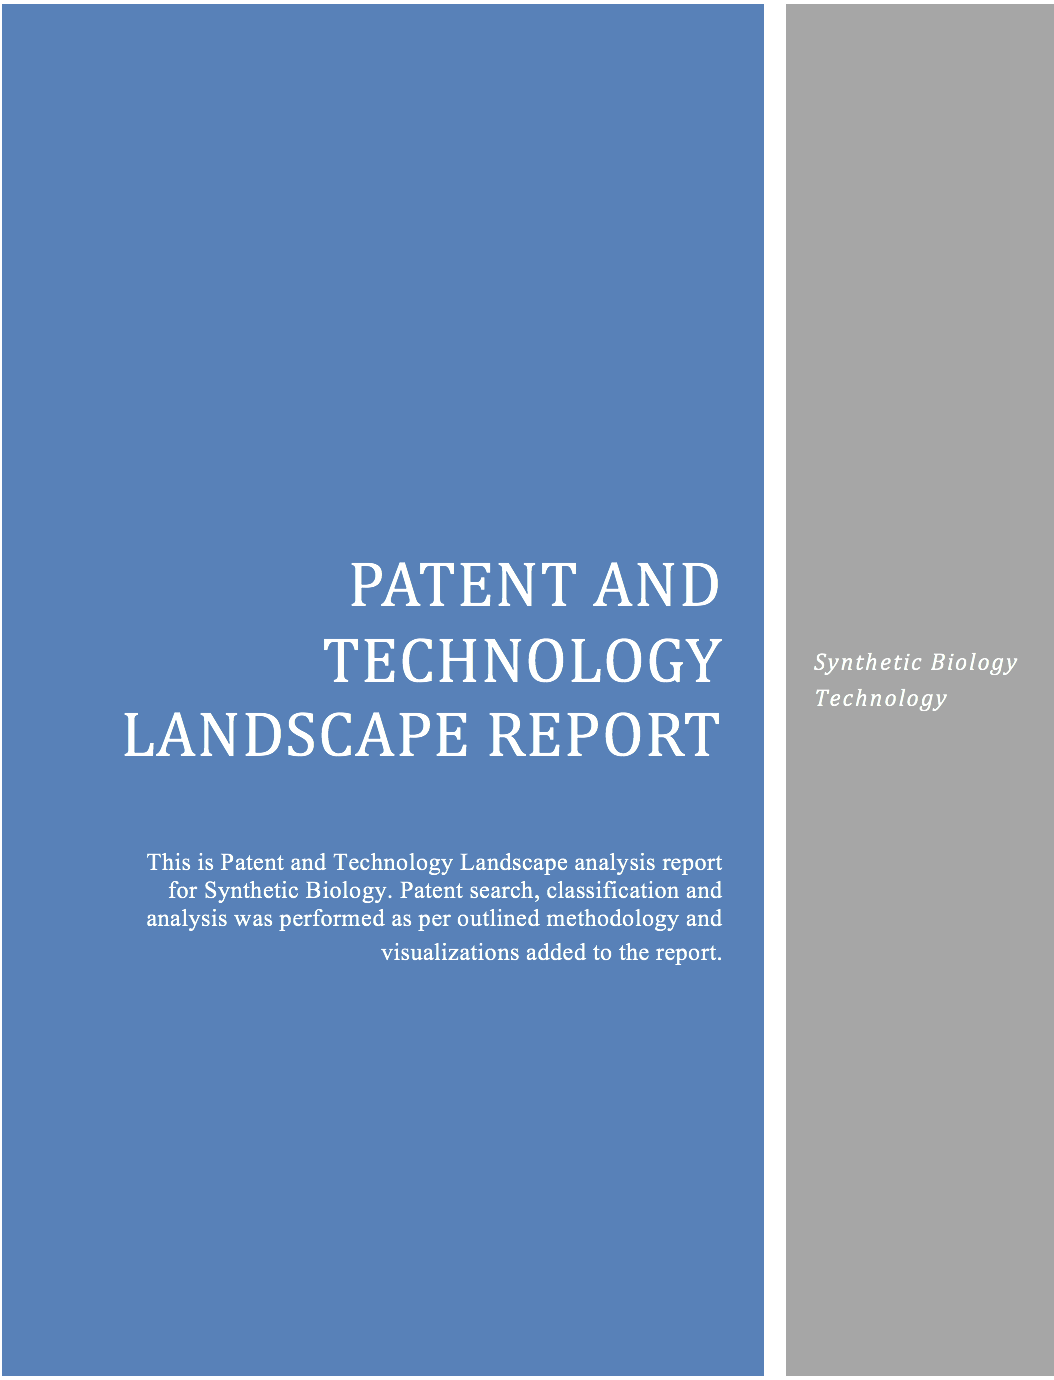 Wearable Technologies Technology Landscape Report